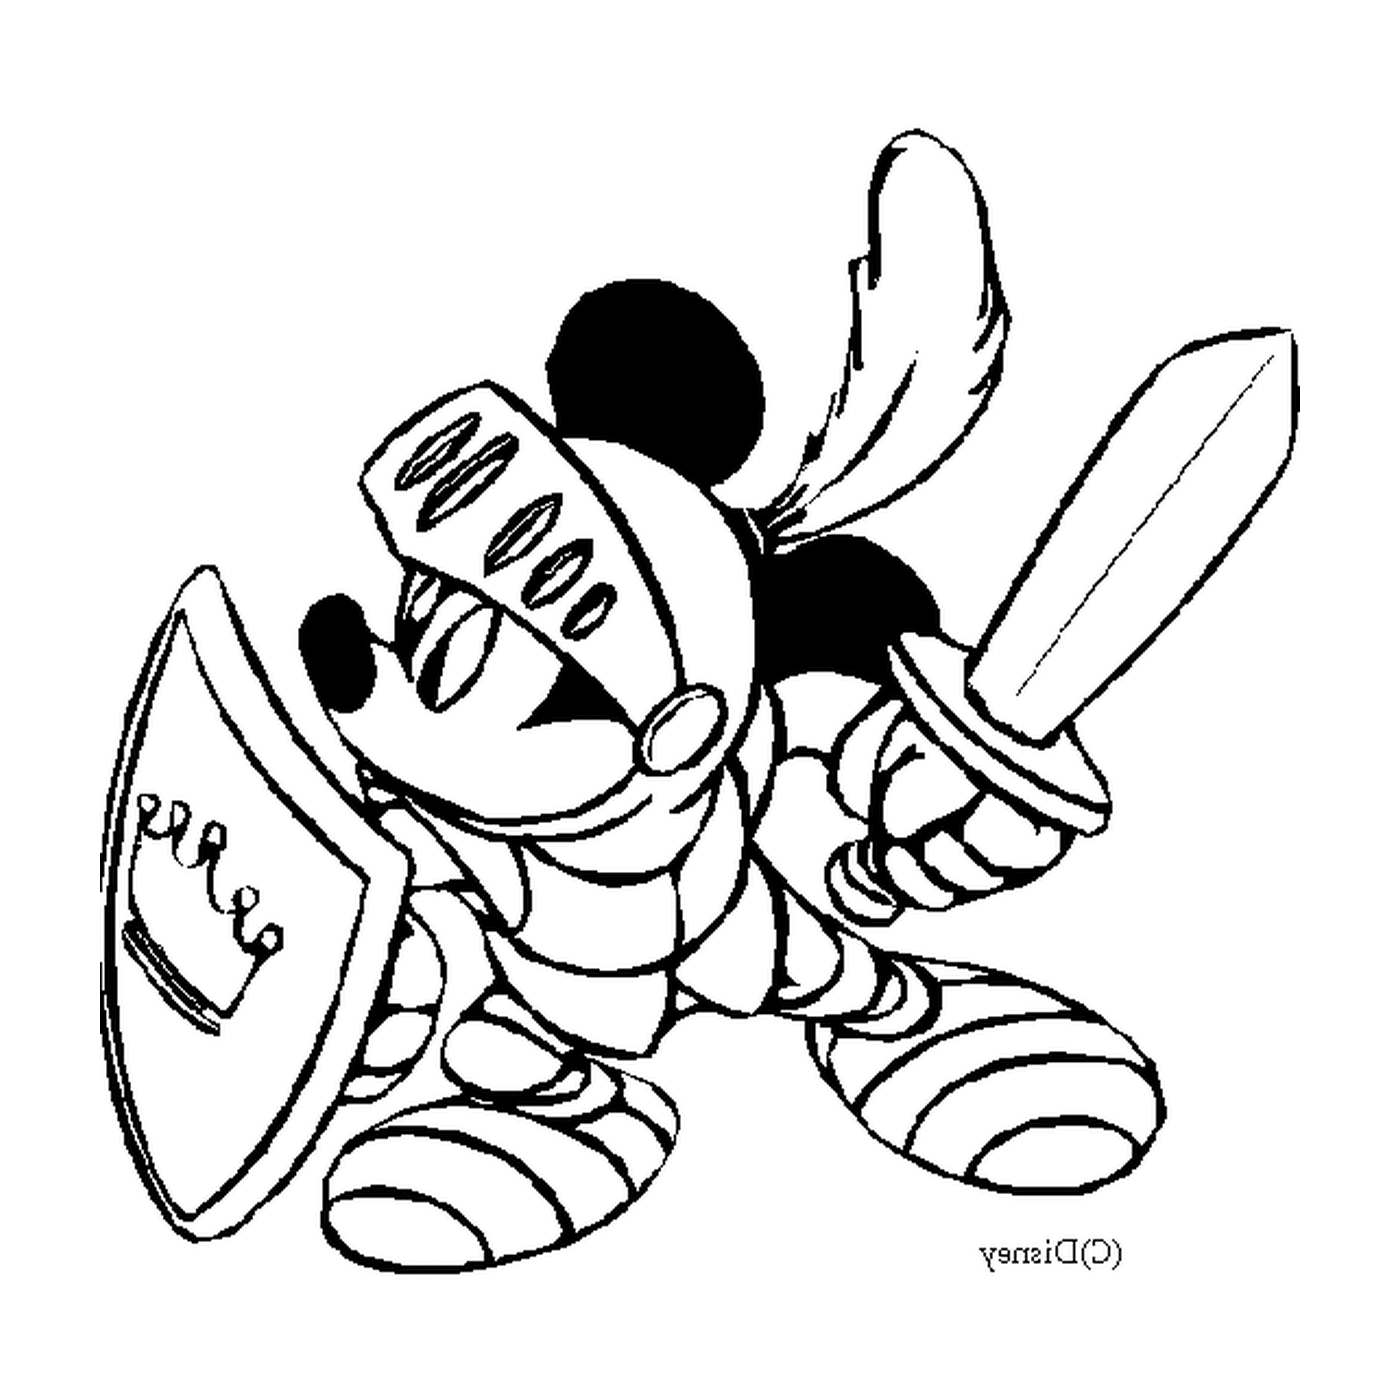   Mickey chevalier : Mickey Mouse en armure tenant une épée 